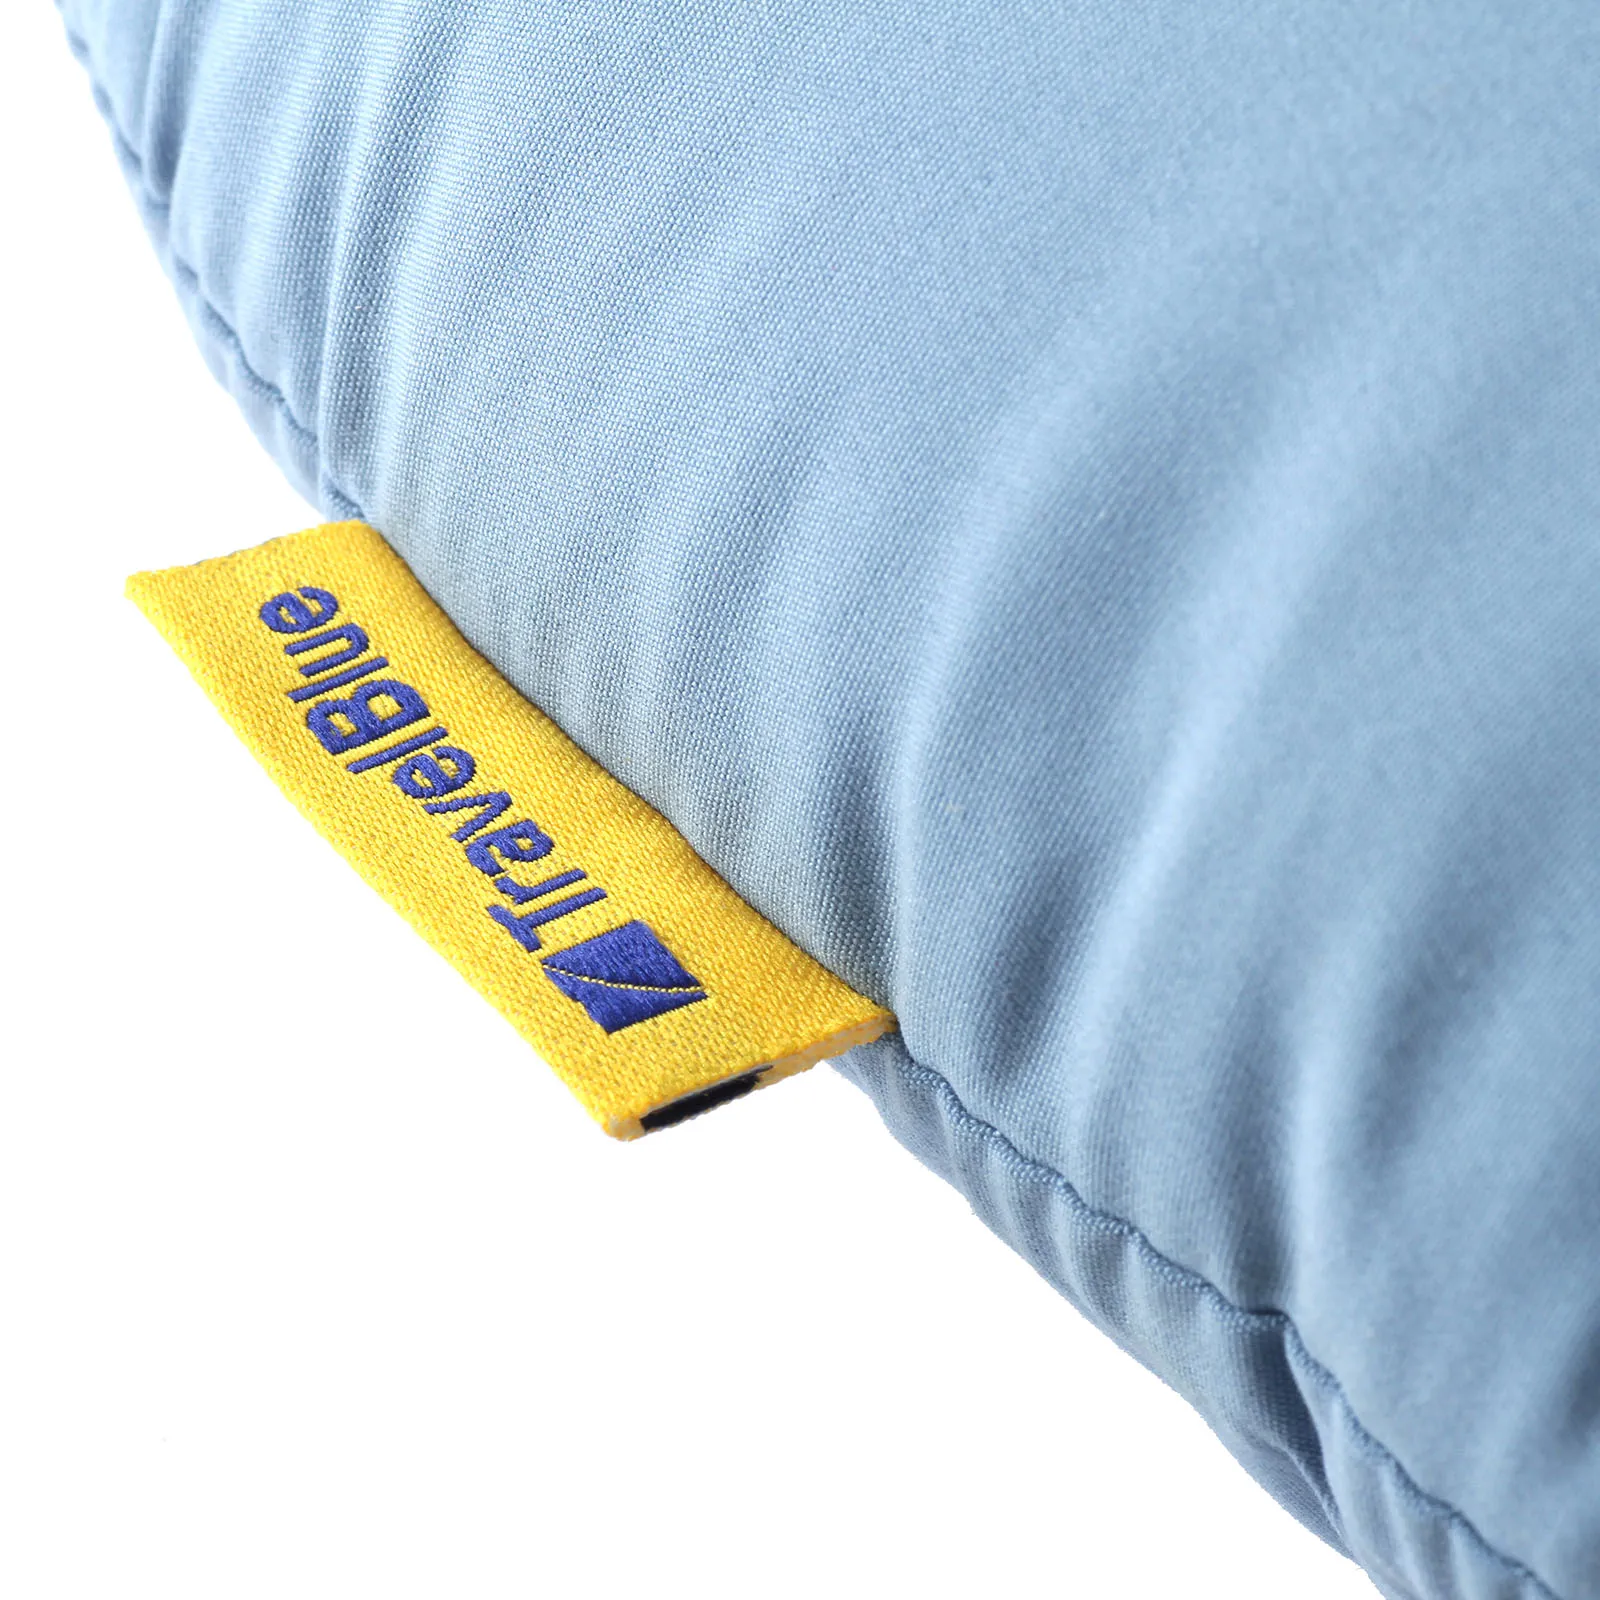 Подушка для путешествий Travel Blue Ultimate Pillow (голубой)